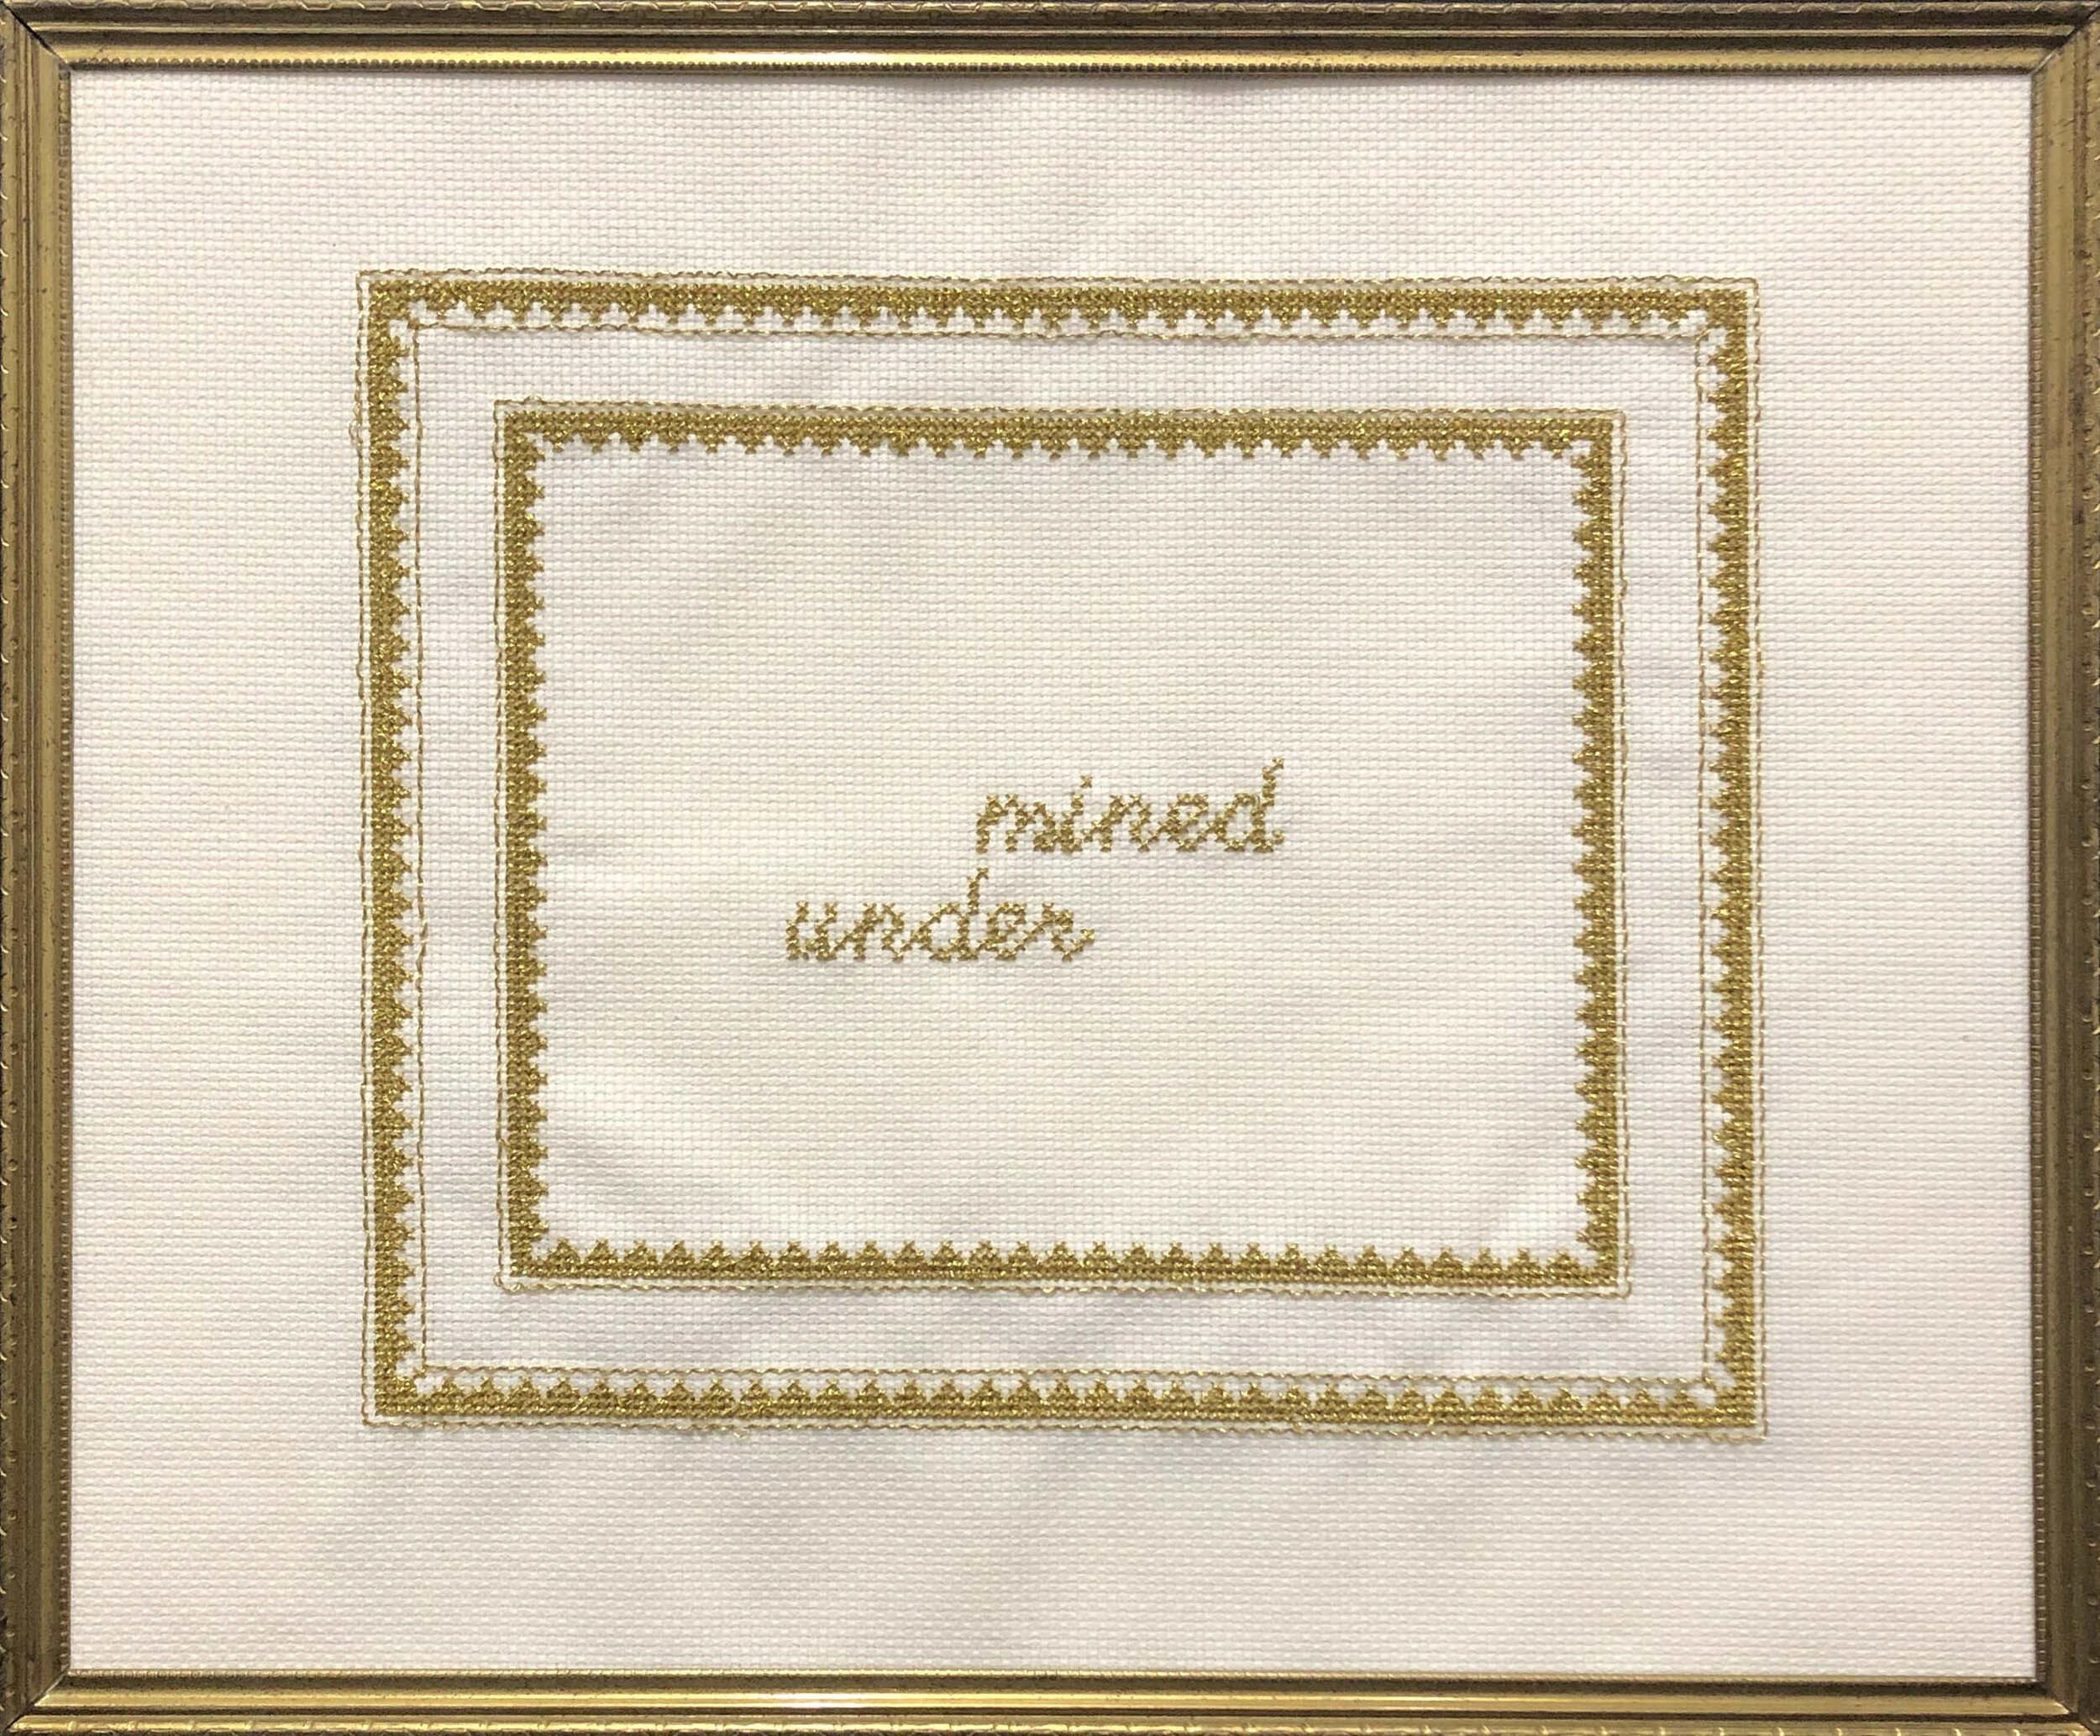   Under Mined , gold thread on Aida cloth, vintage frame, 11" x 11", 2014 